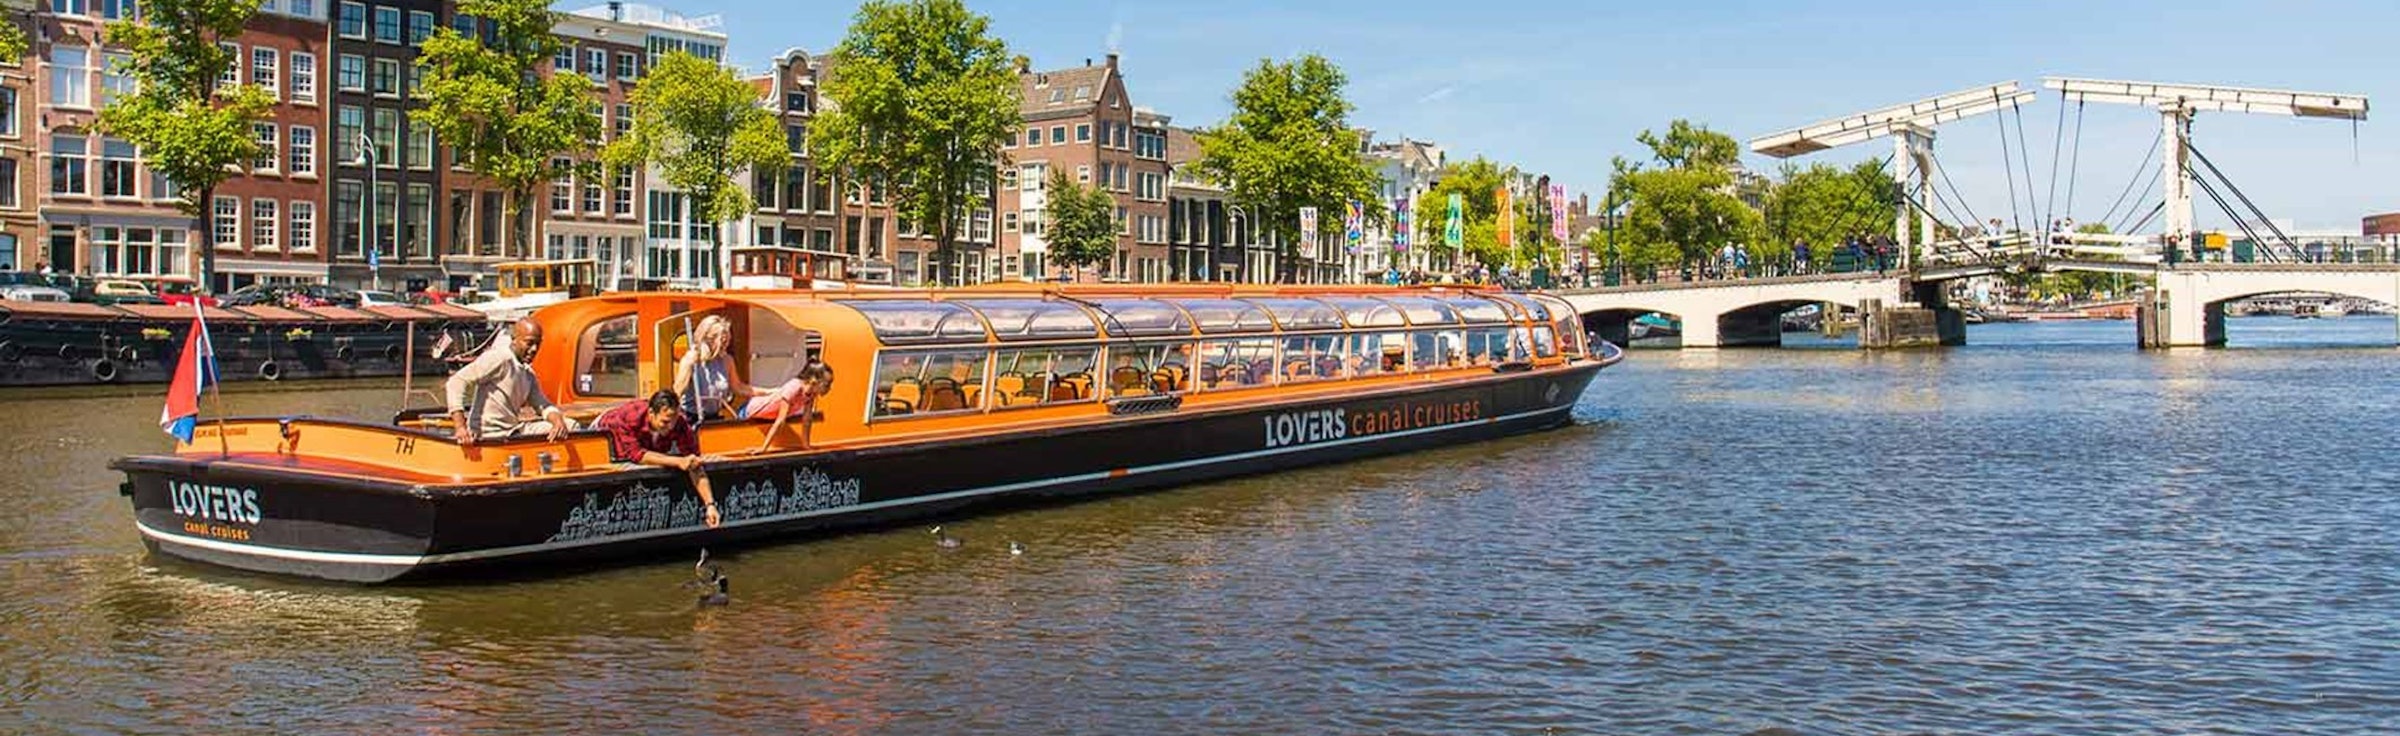 Amsterdam vacations